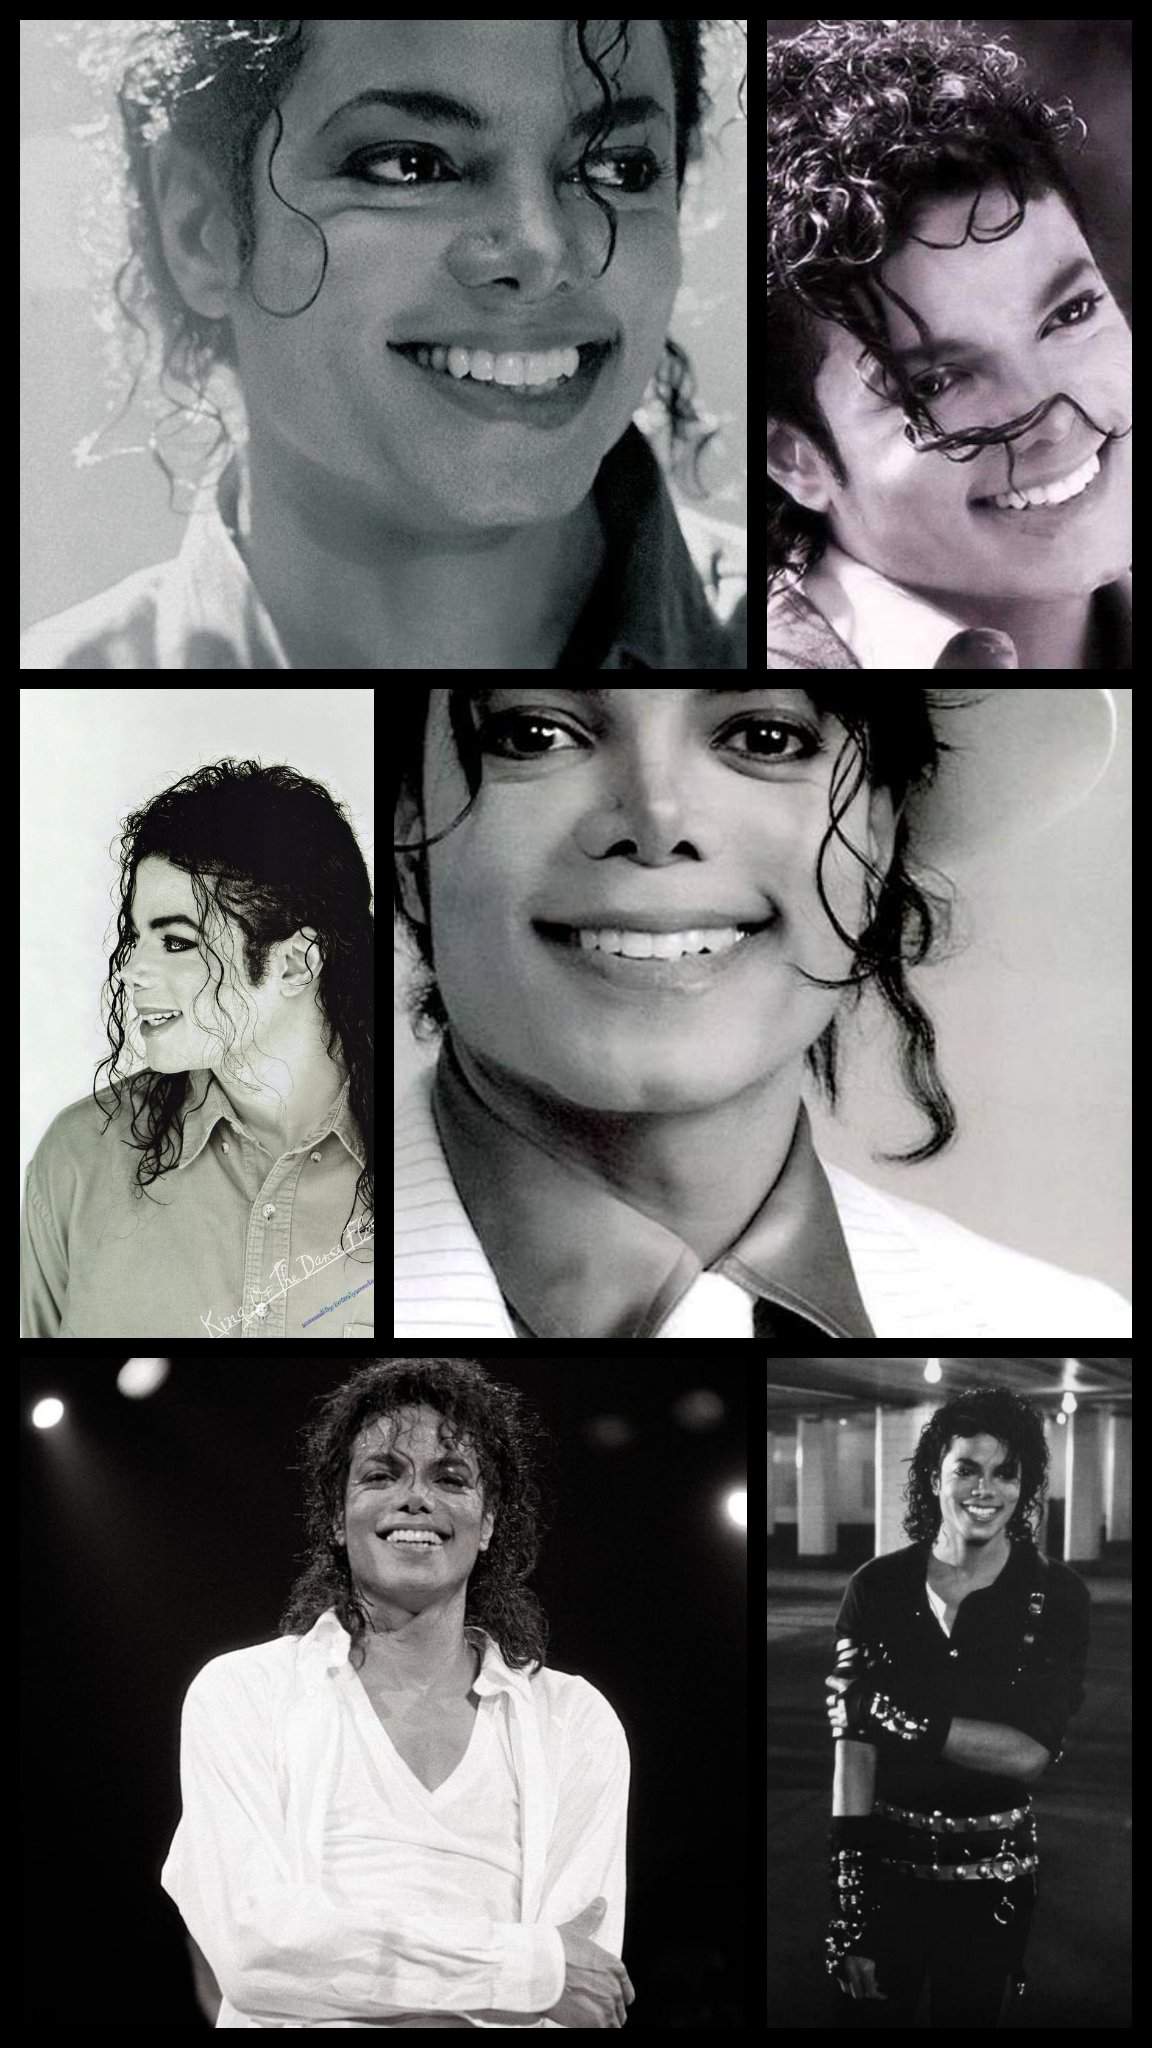 Michael jackson the king of pop - Michael Jackson